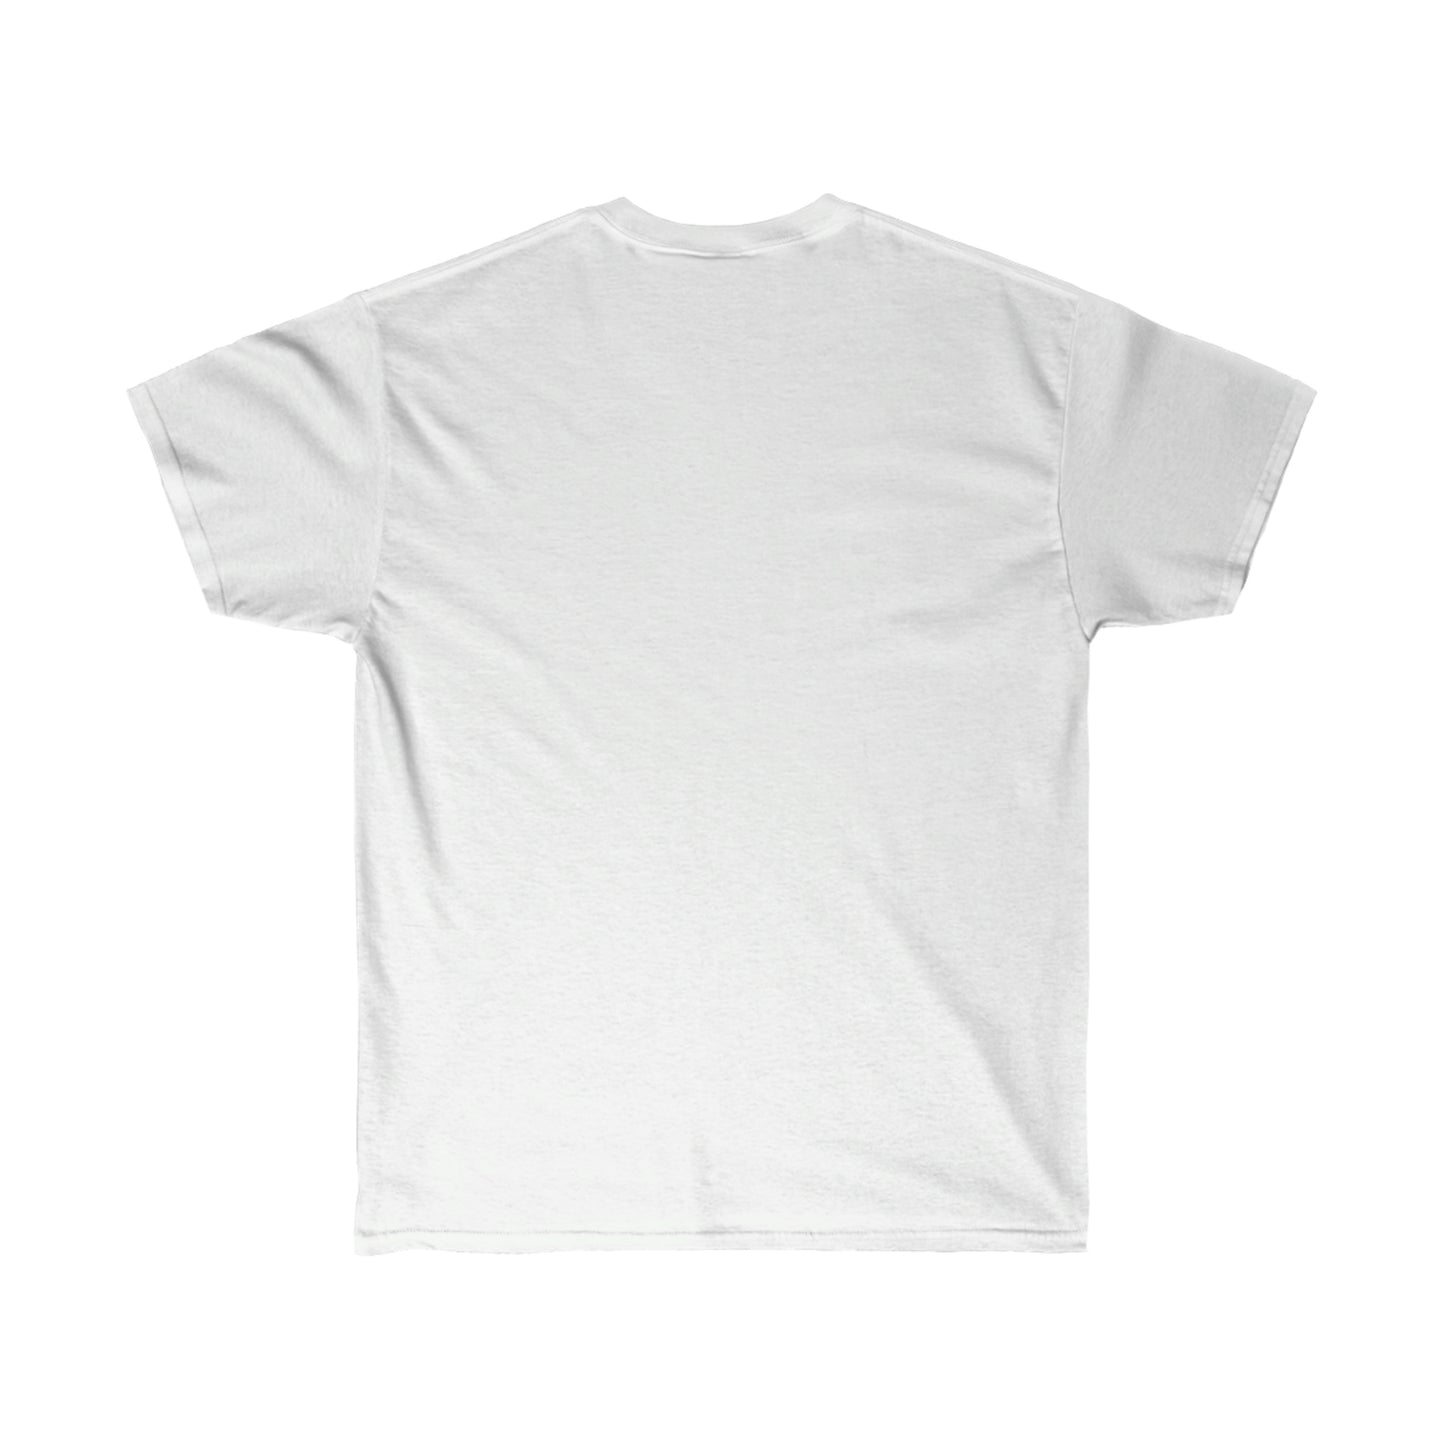 Faded Children - Unisex T-Shirt